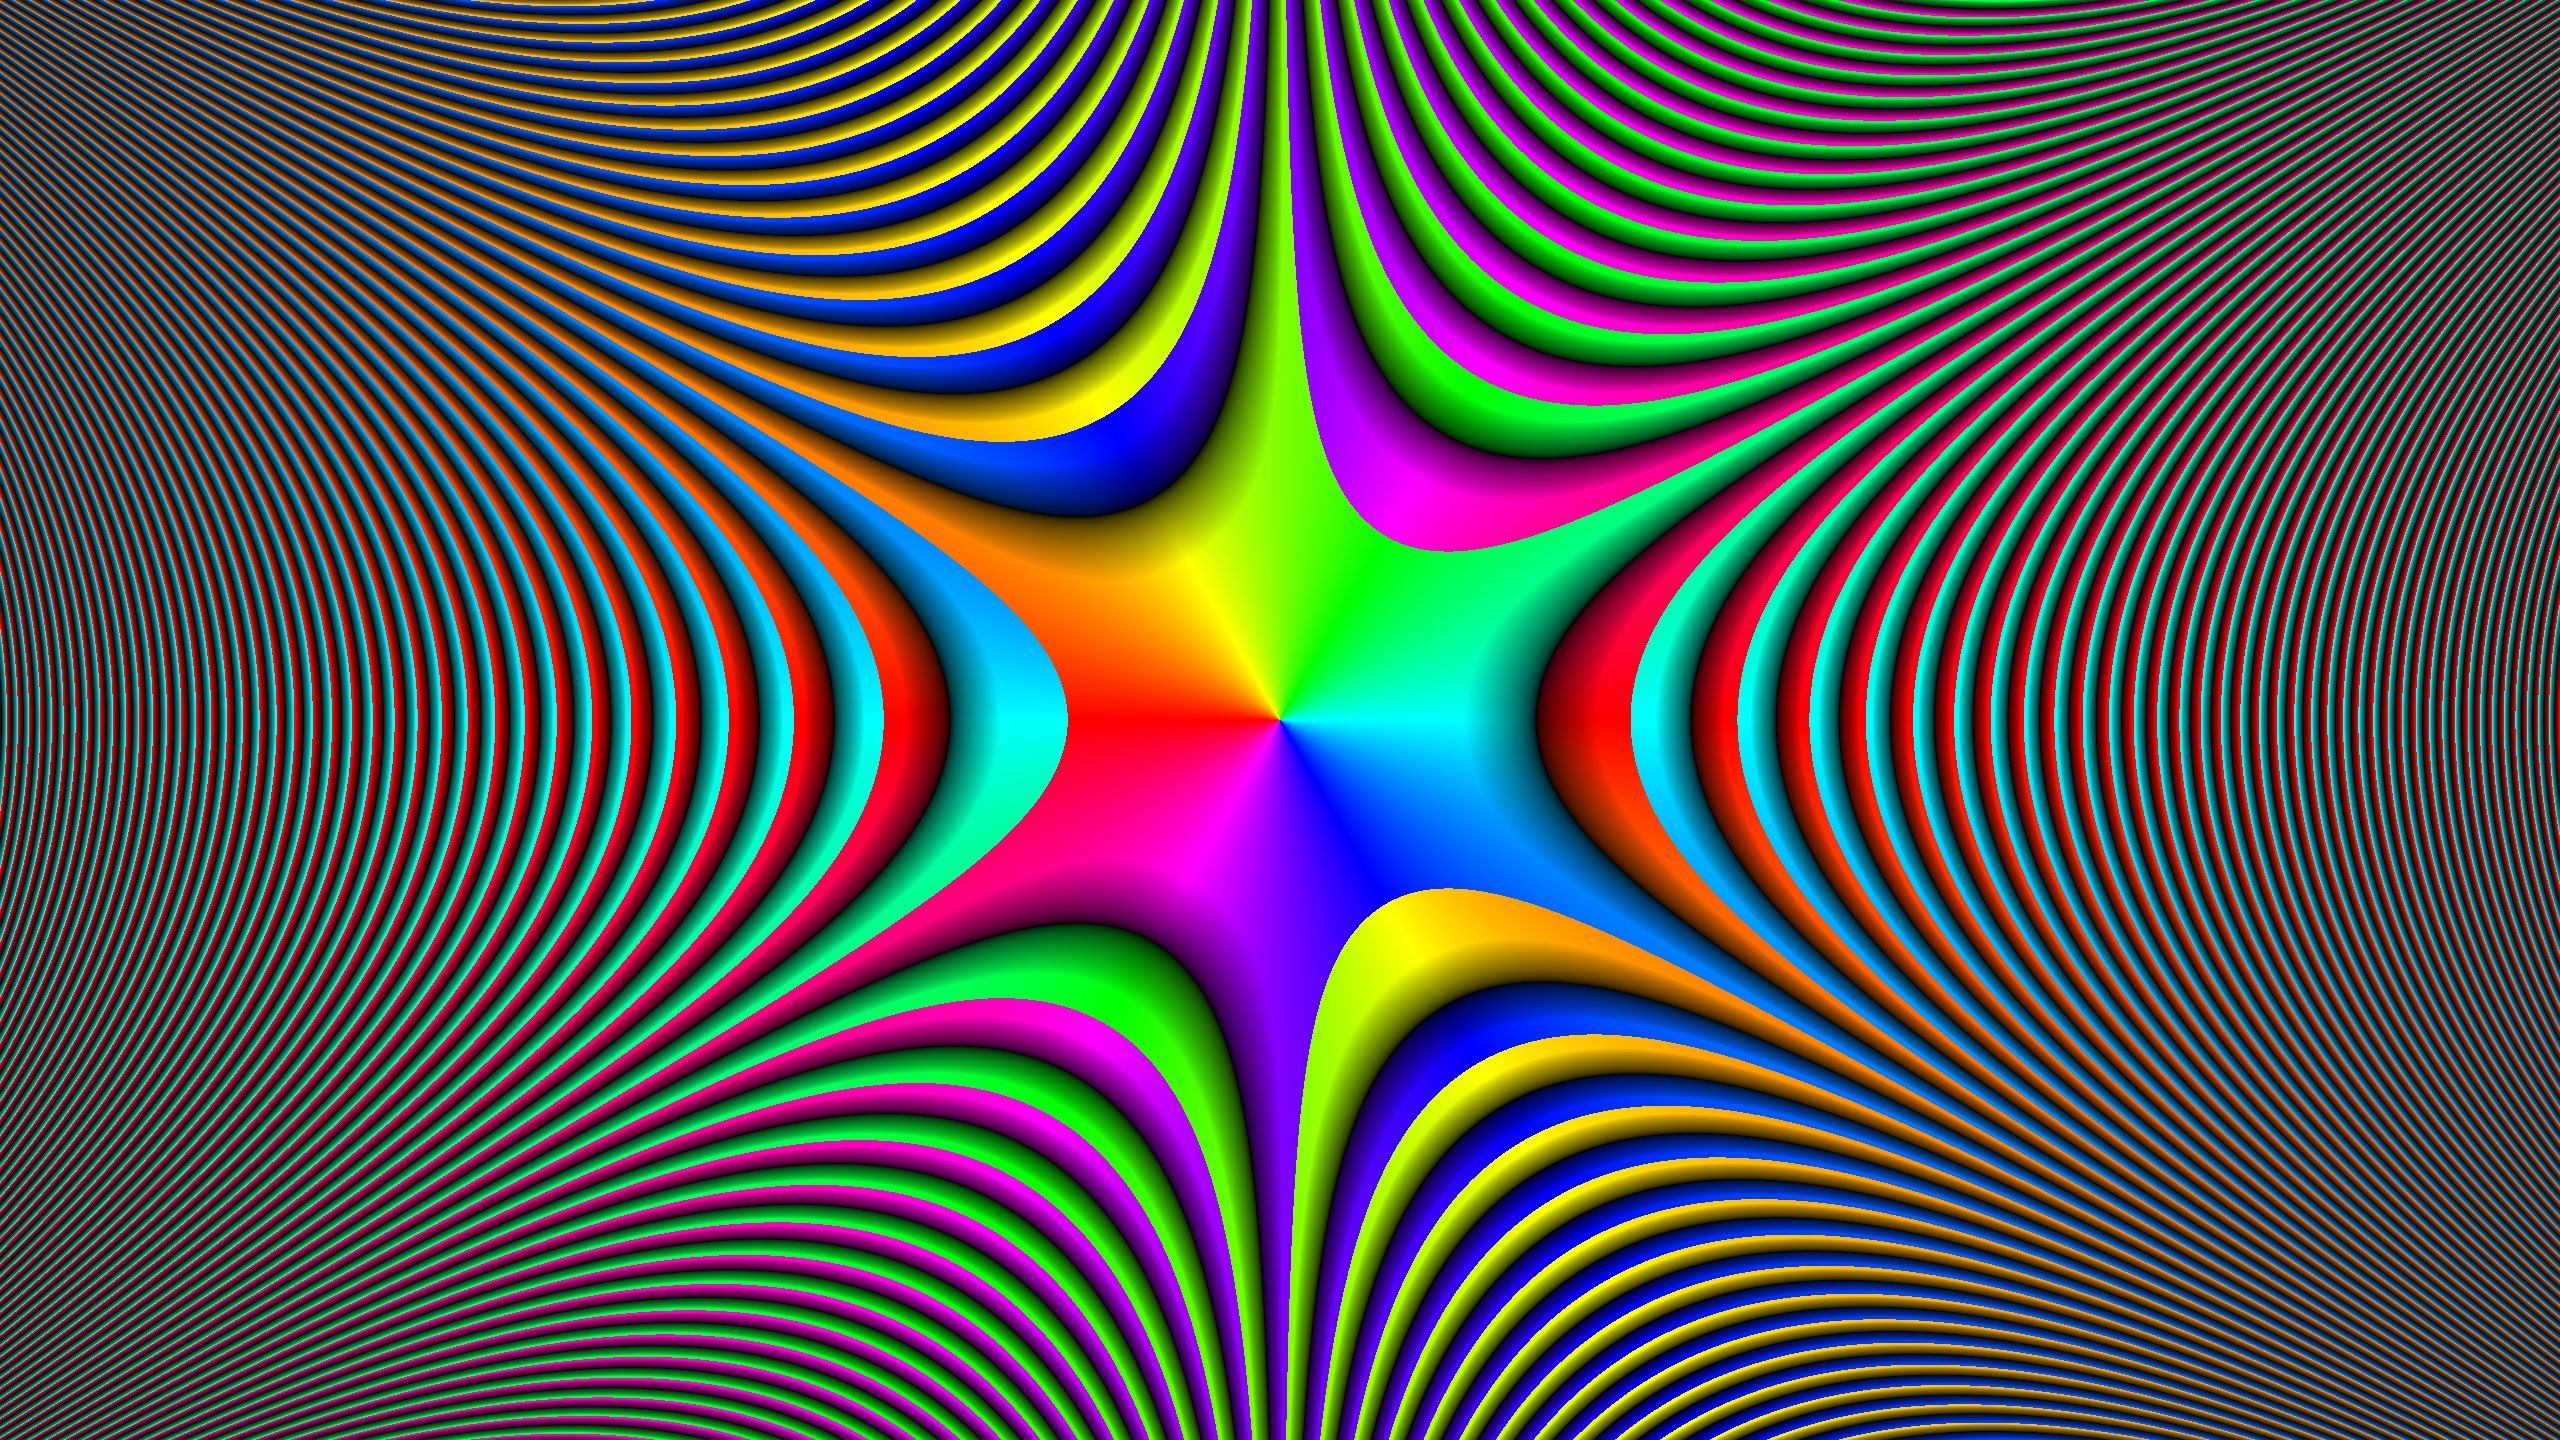 Illusion Desktop Backgrounds Group (74+)